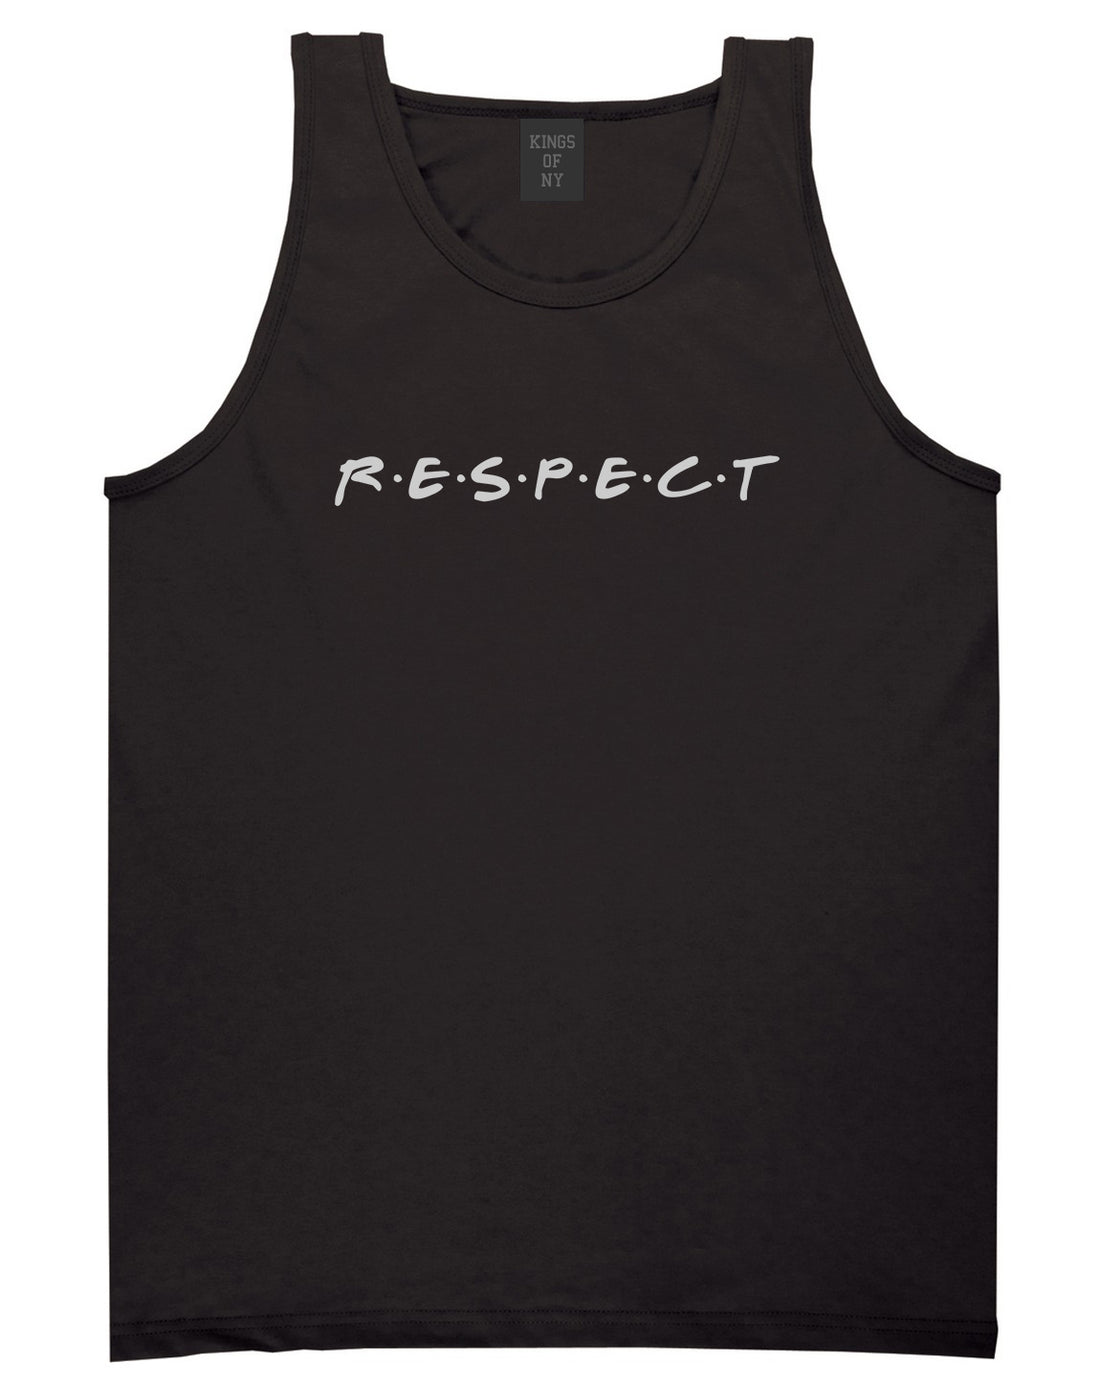 Respect Aretha Mens Tank Top Shirt Black by Kings Of NY